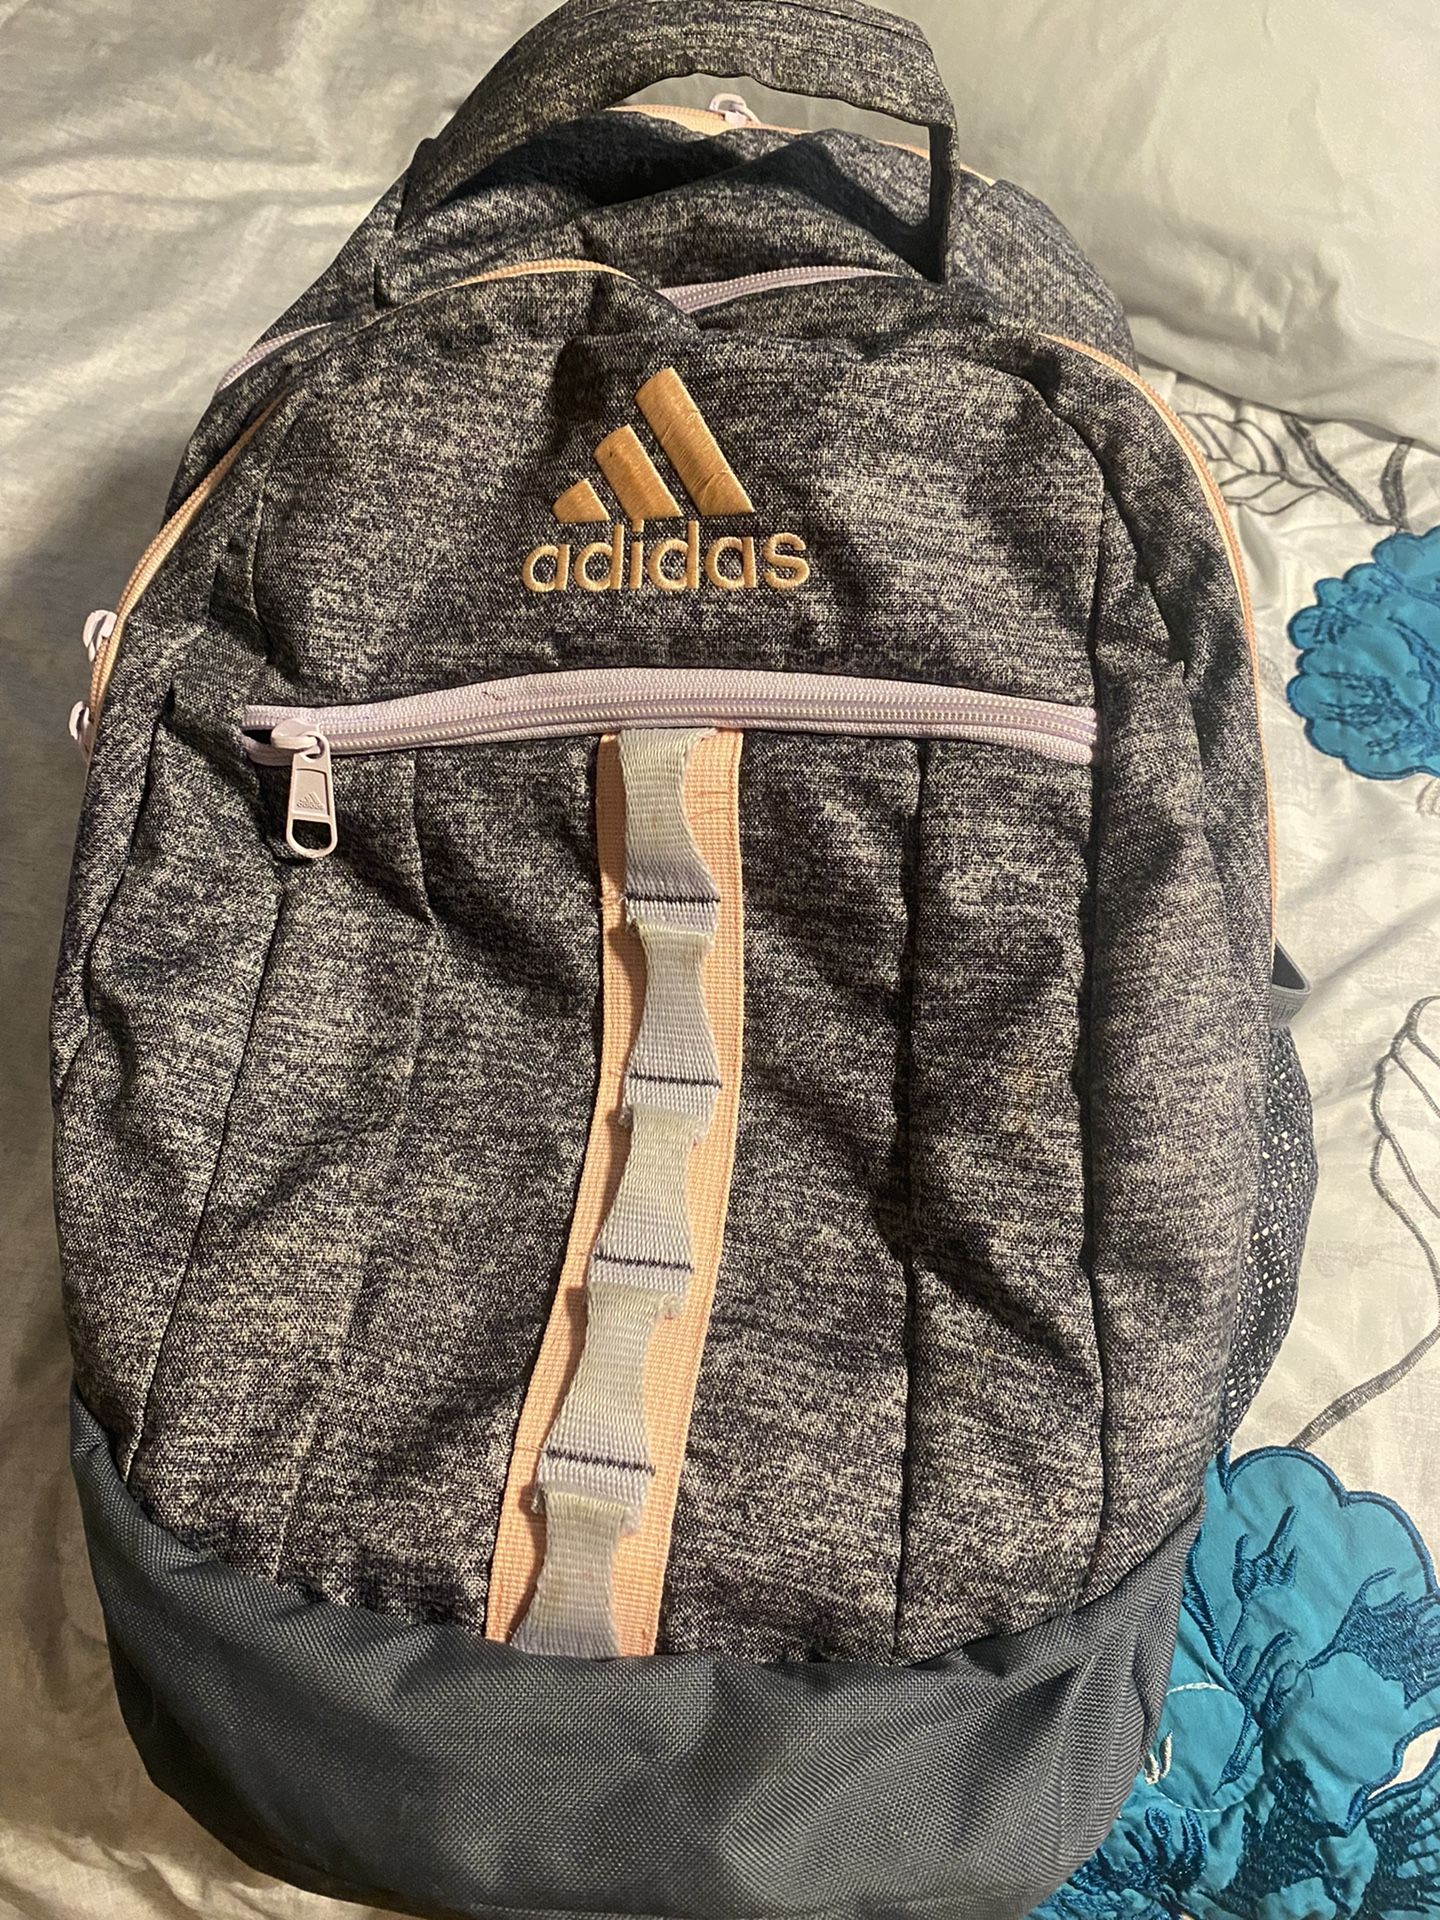 Backpack Original Adidas Brand 